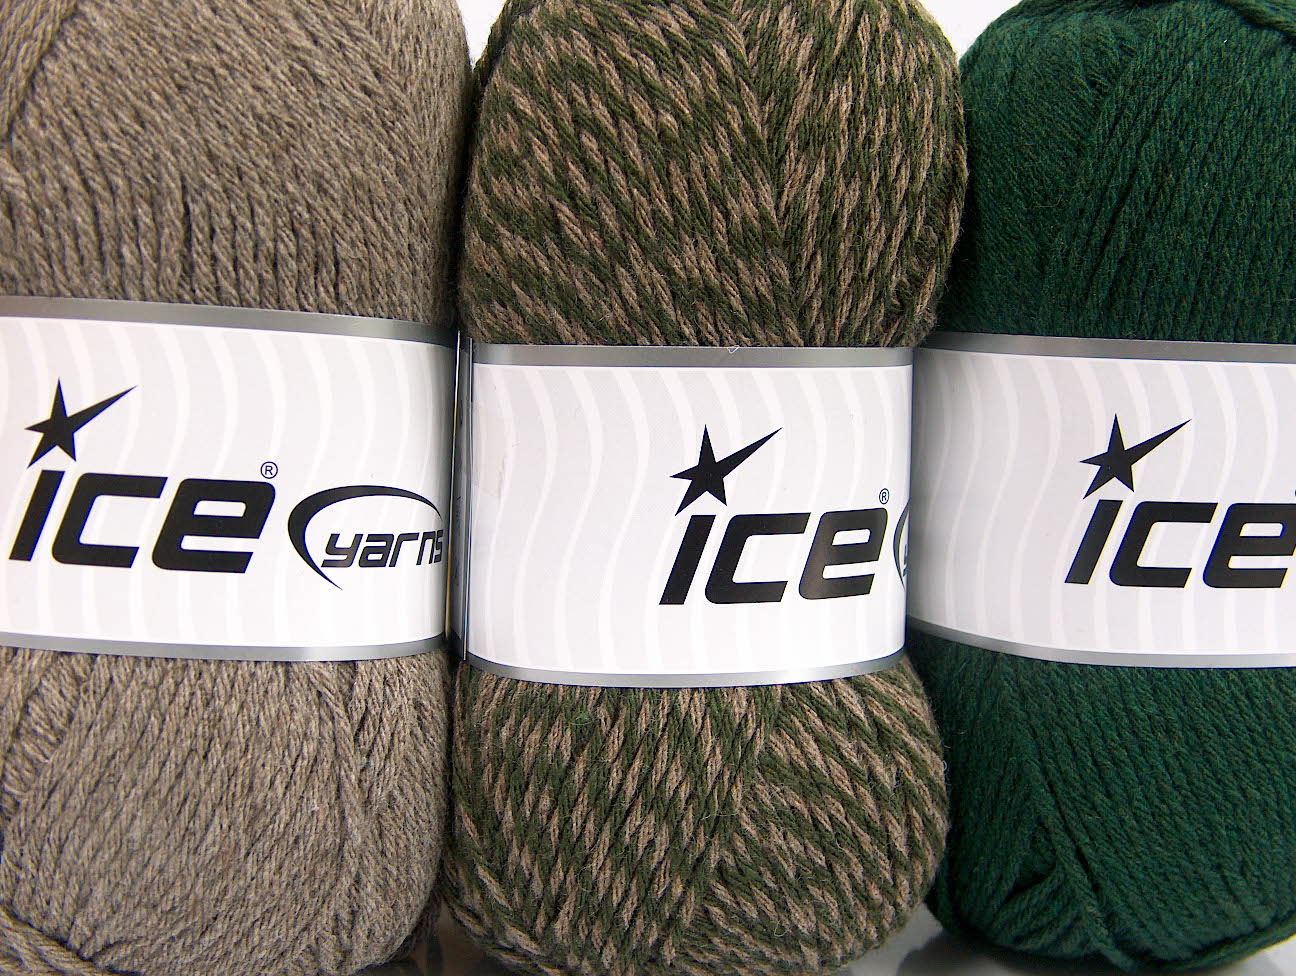 Wool Cord Fuchsia Ice Yarn, Weight 4 Yarn, Wool Acrylic Blend Yarn